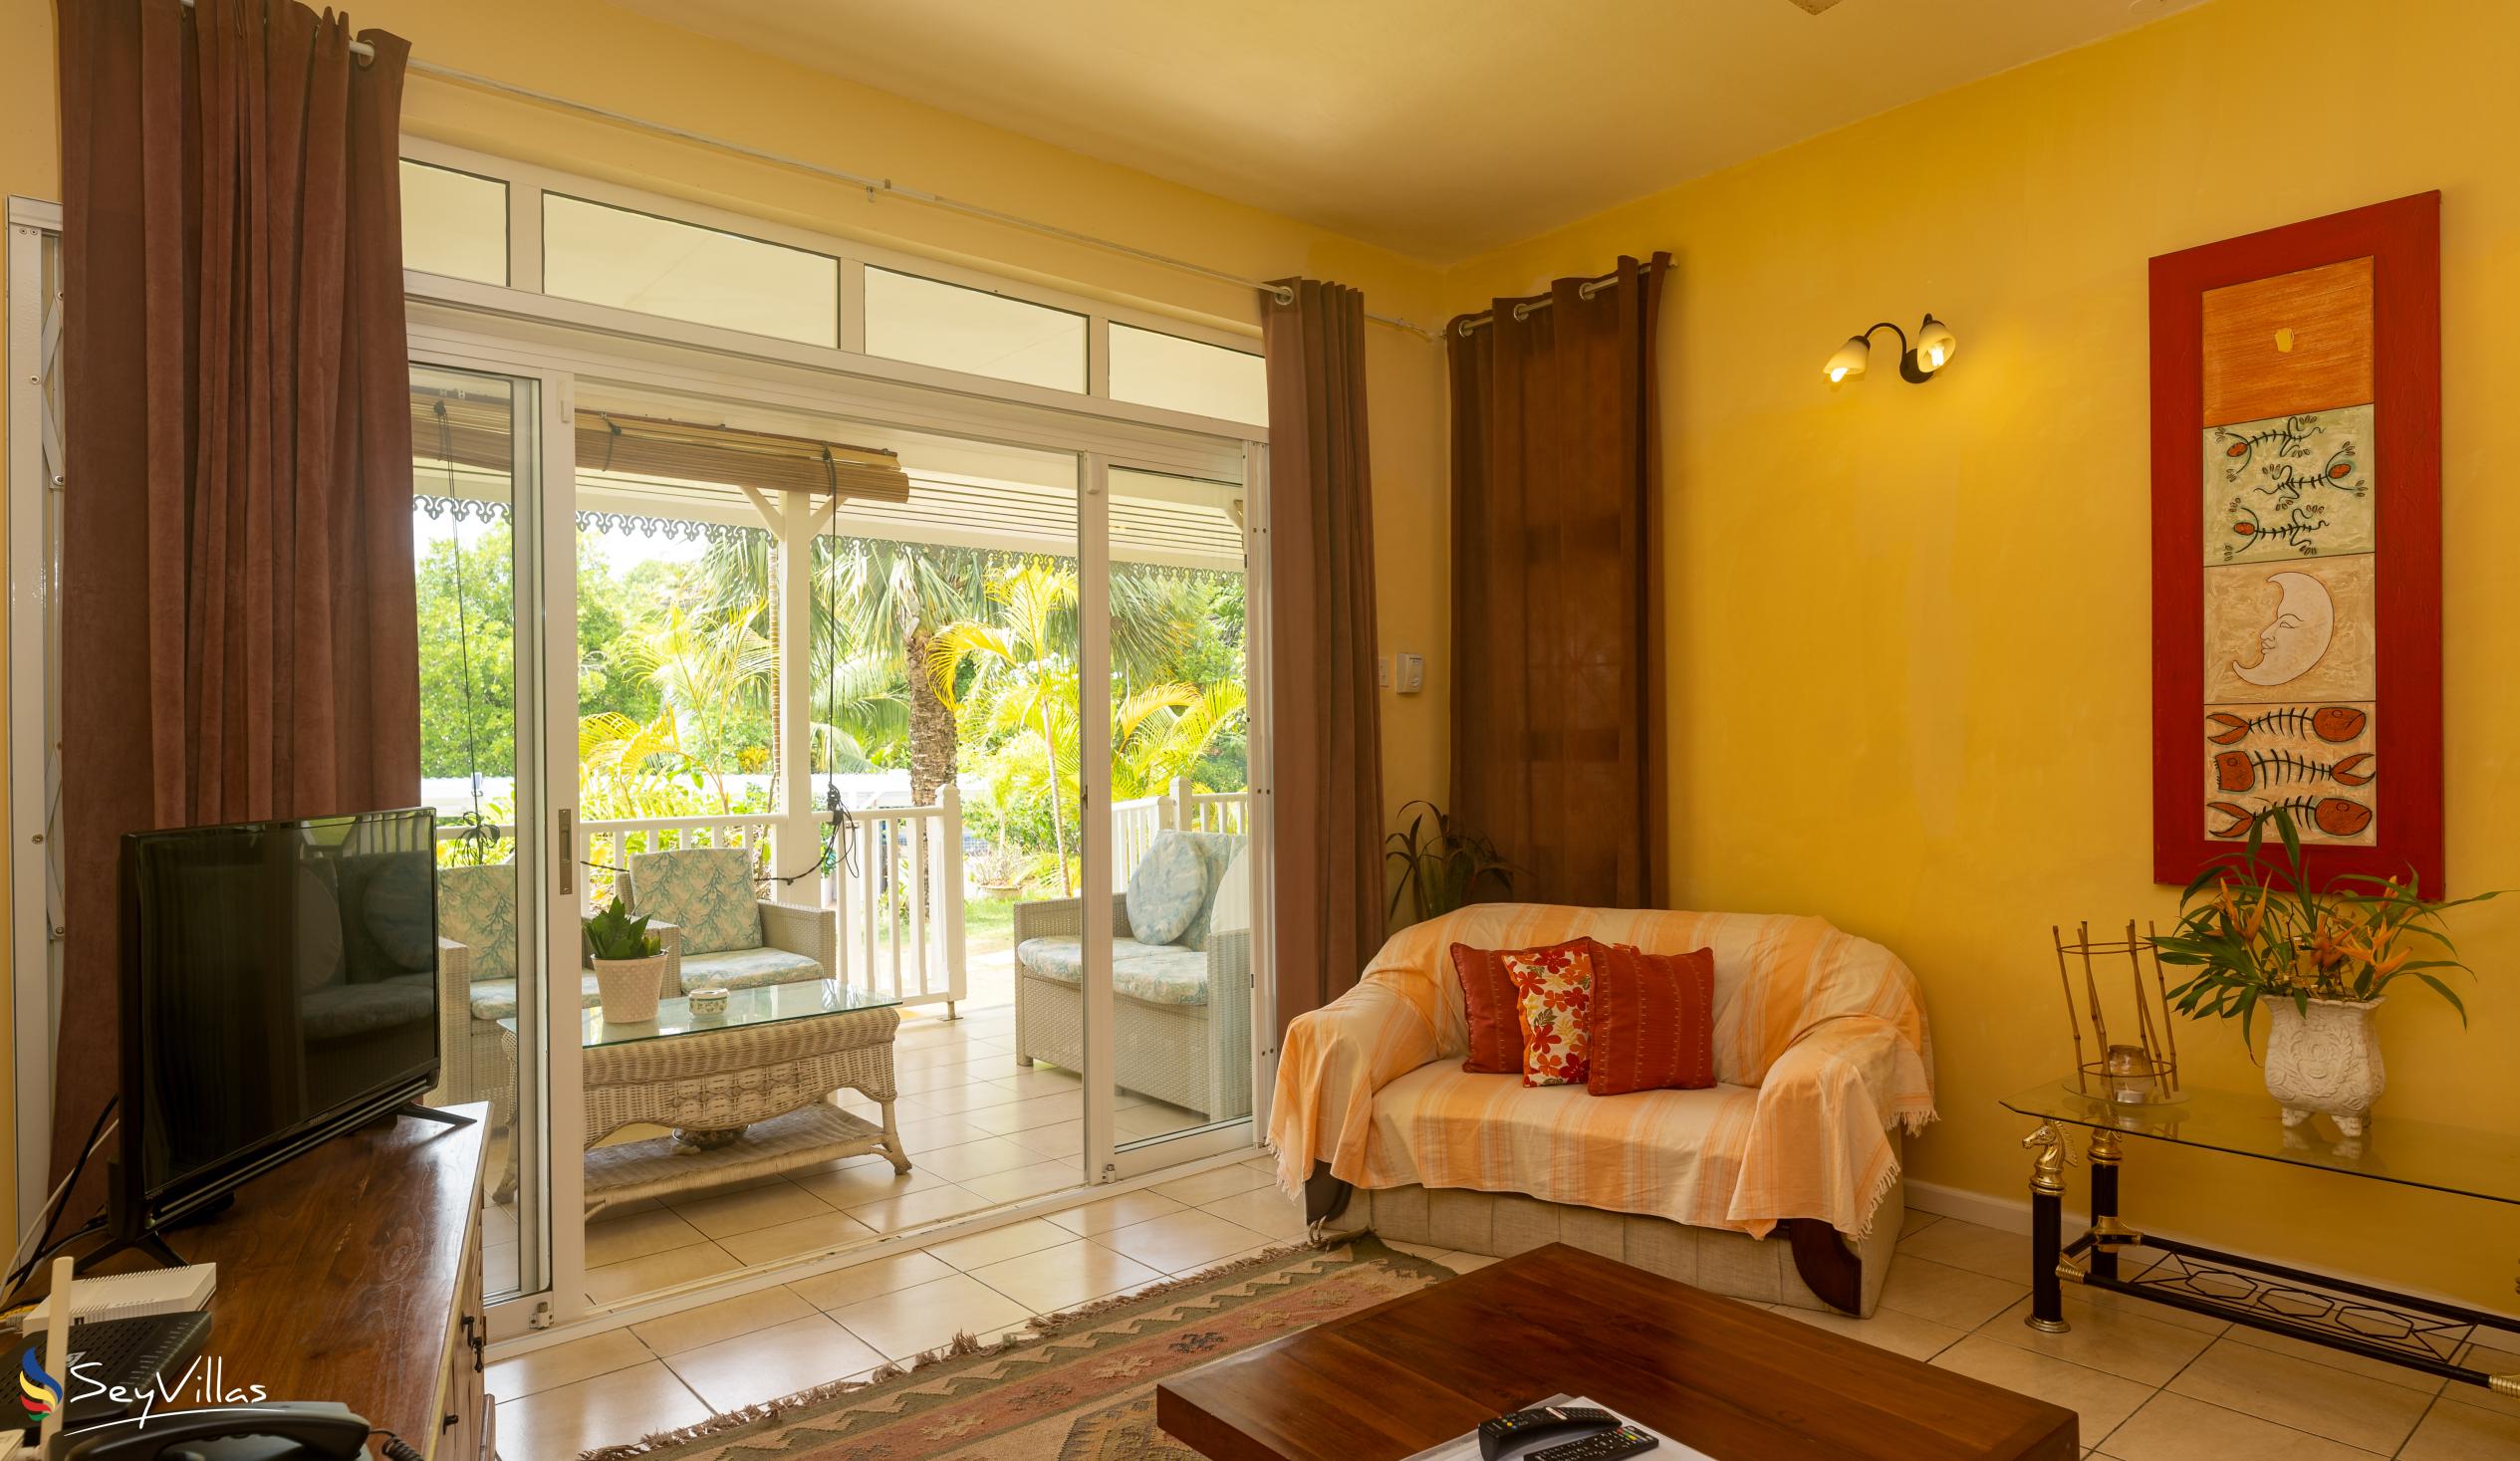 Photo 87: Residence Monte Cristo - 3-Bedroom Duplex - Mahé (Seychelles)